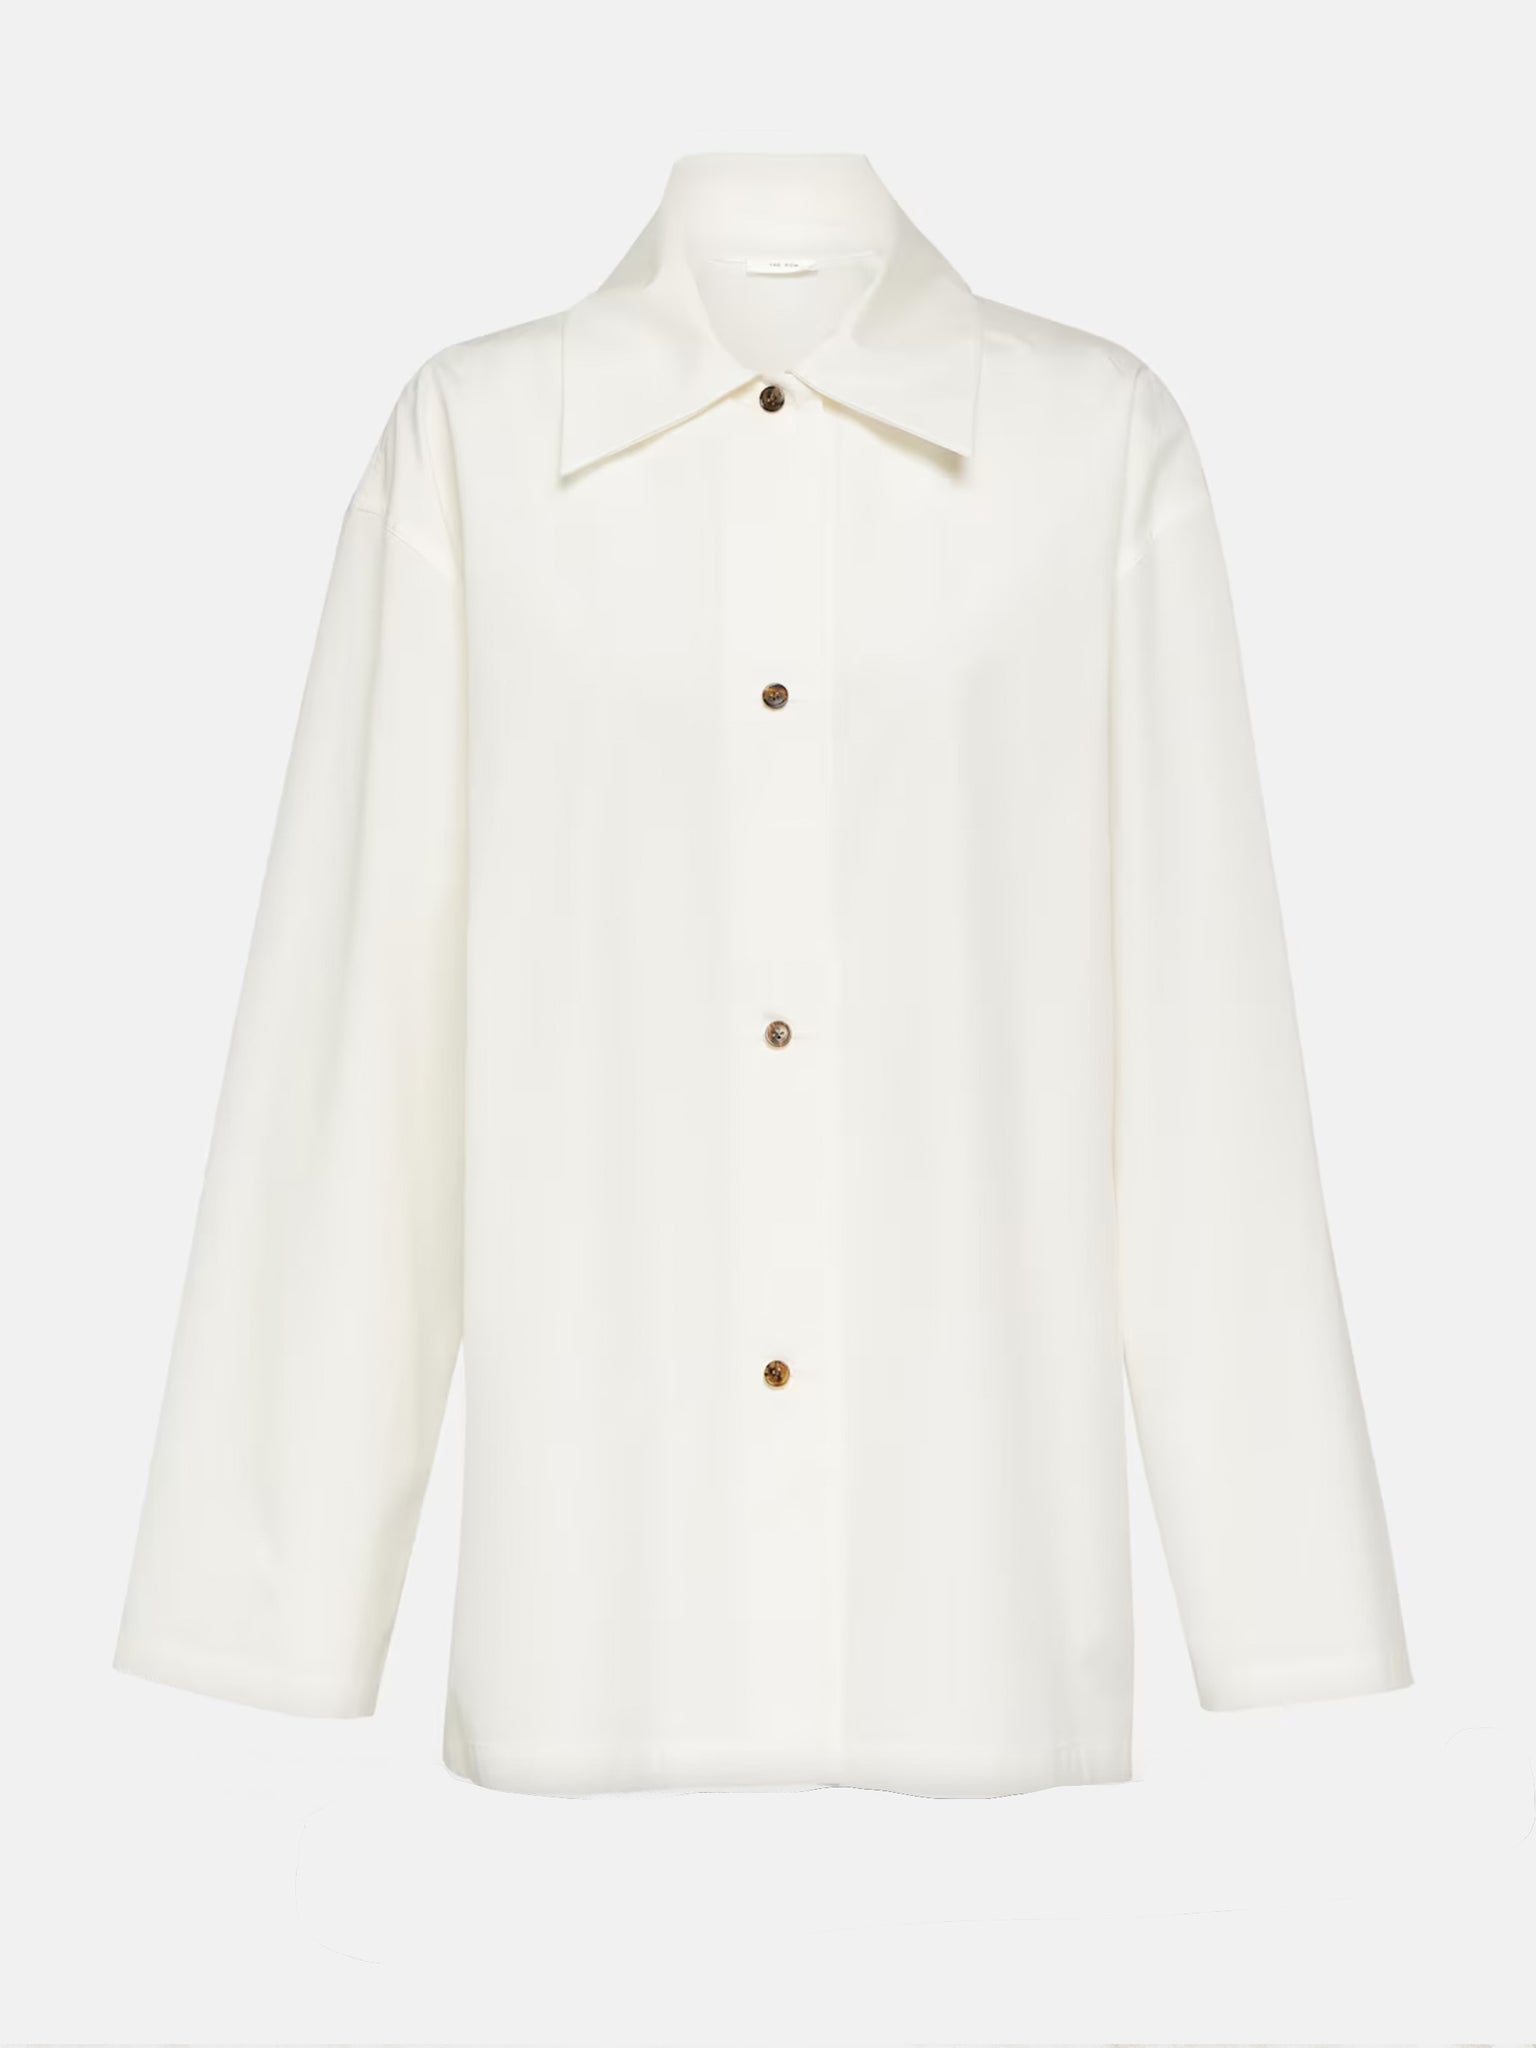 Rigel Shirt Cotton Shell White